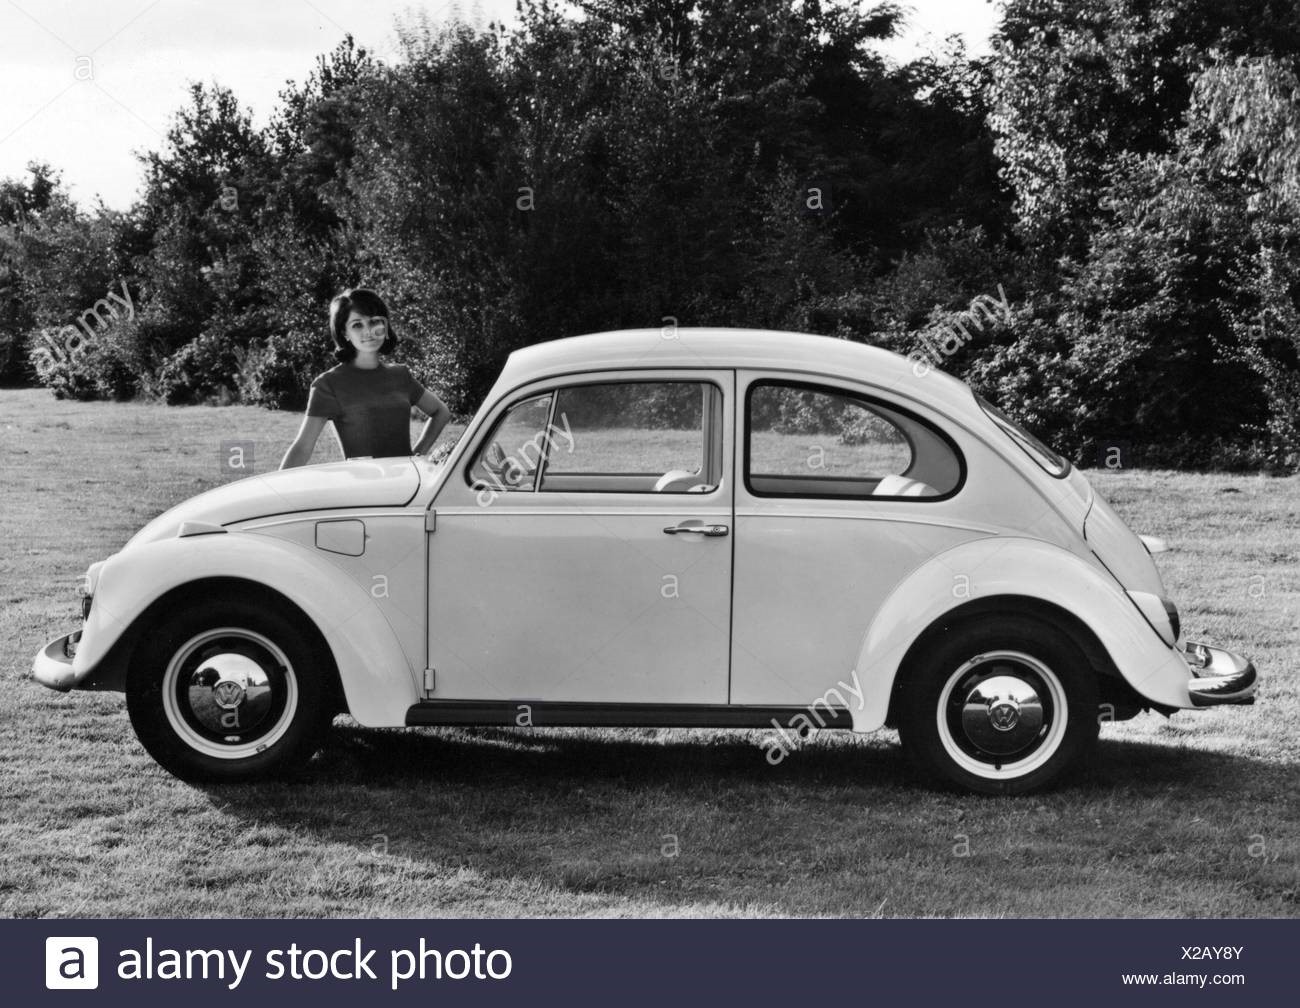 Volkswagen VW 1200 Beetle side view 1968.